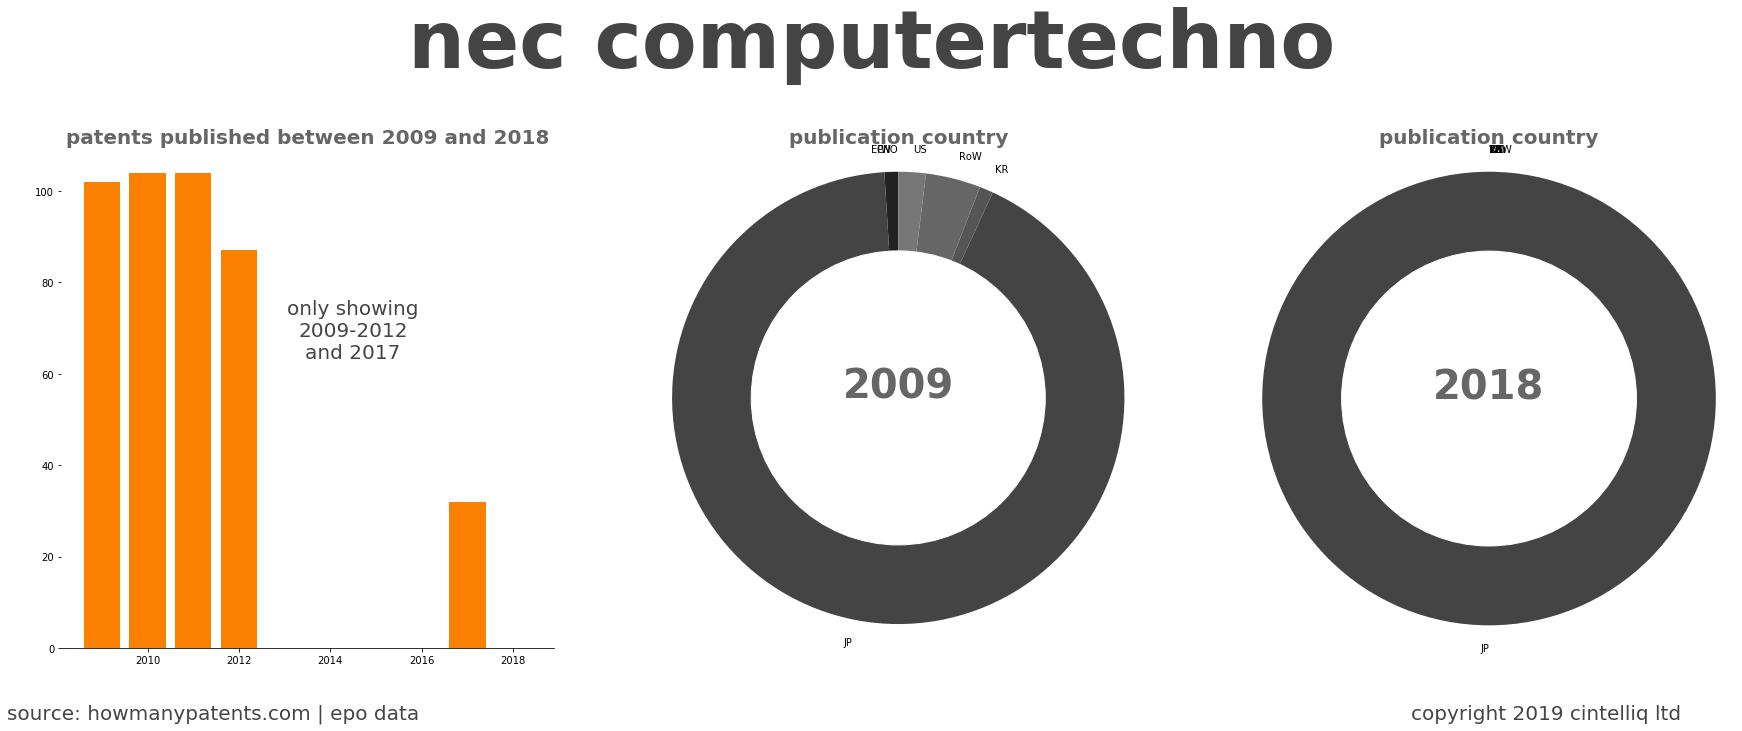 summary of patents for Nec Computertechno